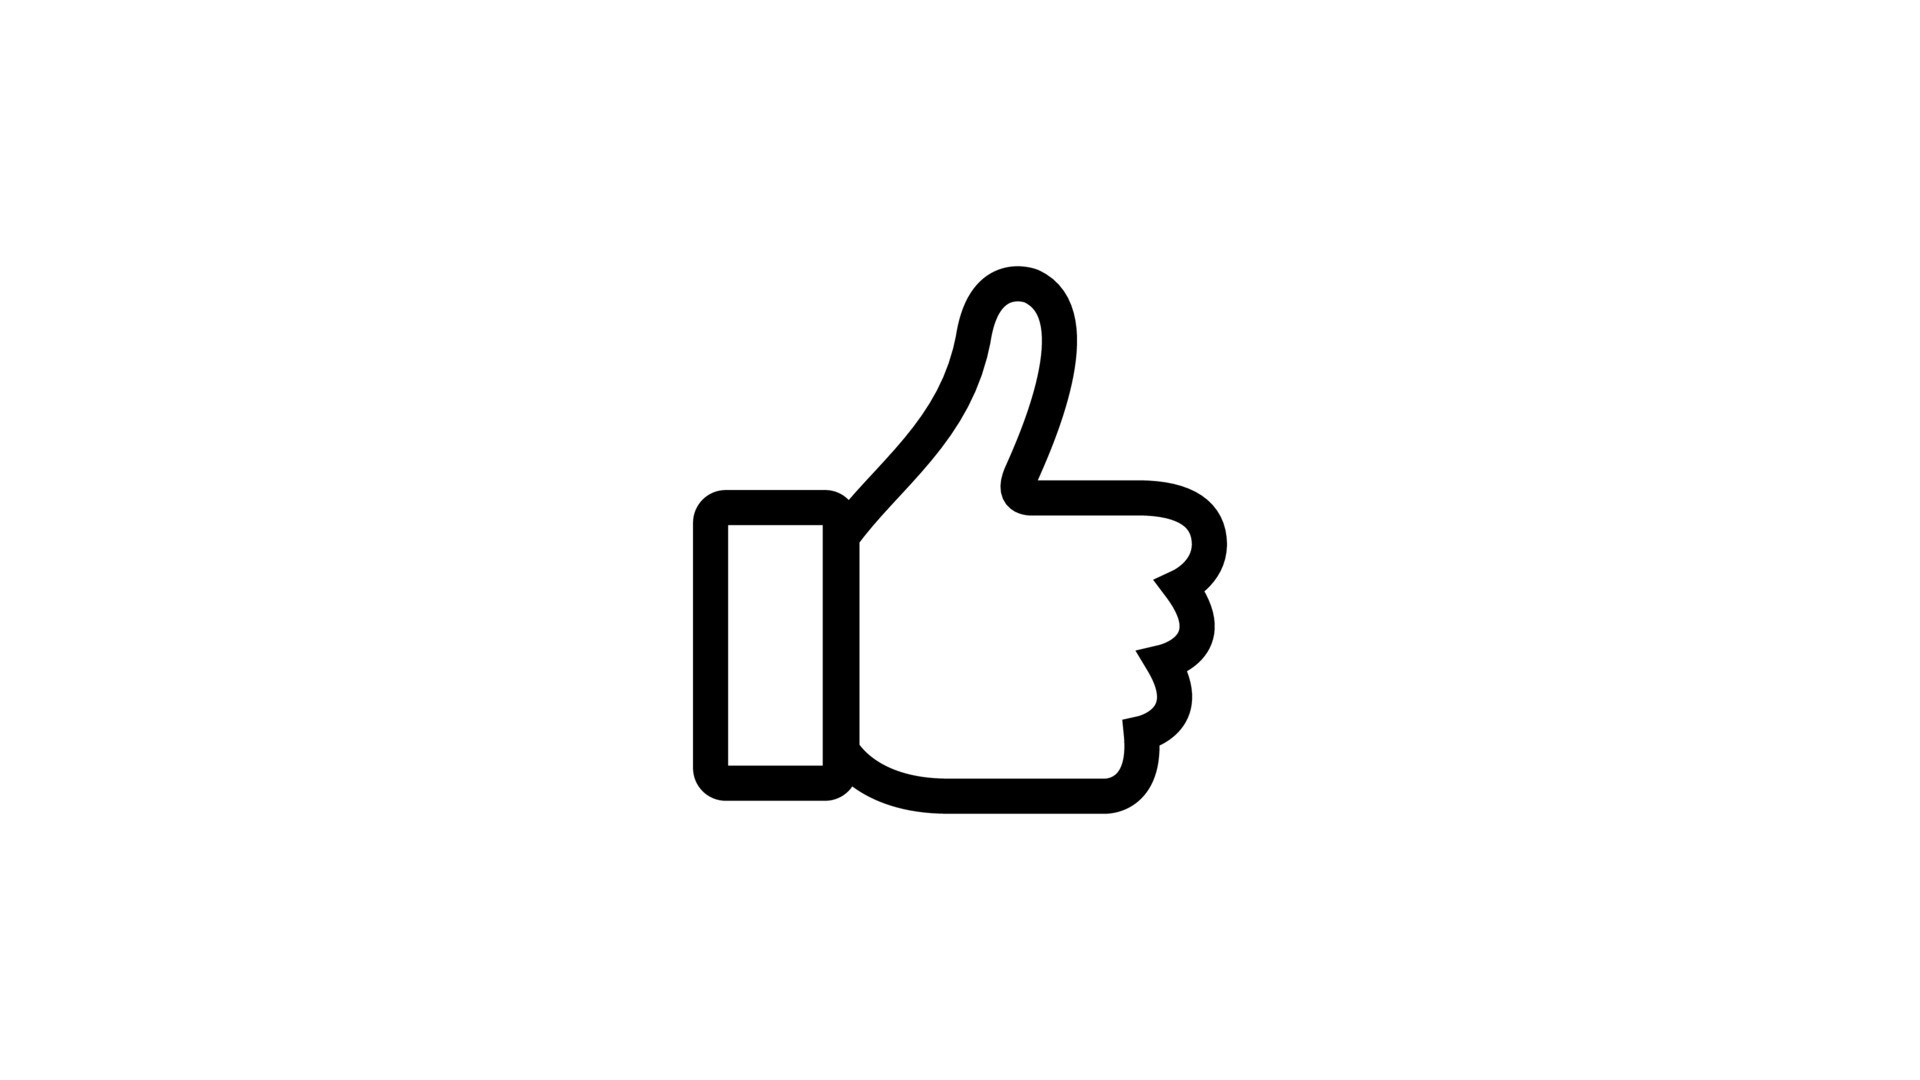 thumbs-up-symbol-icon-illustration-free-vector.jpg